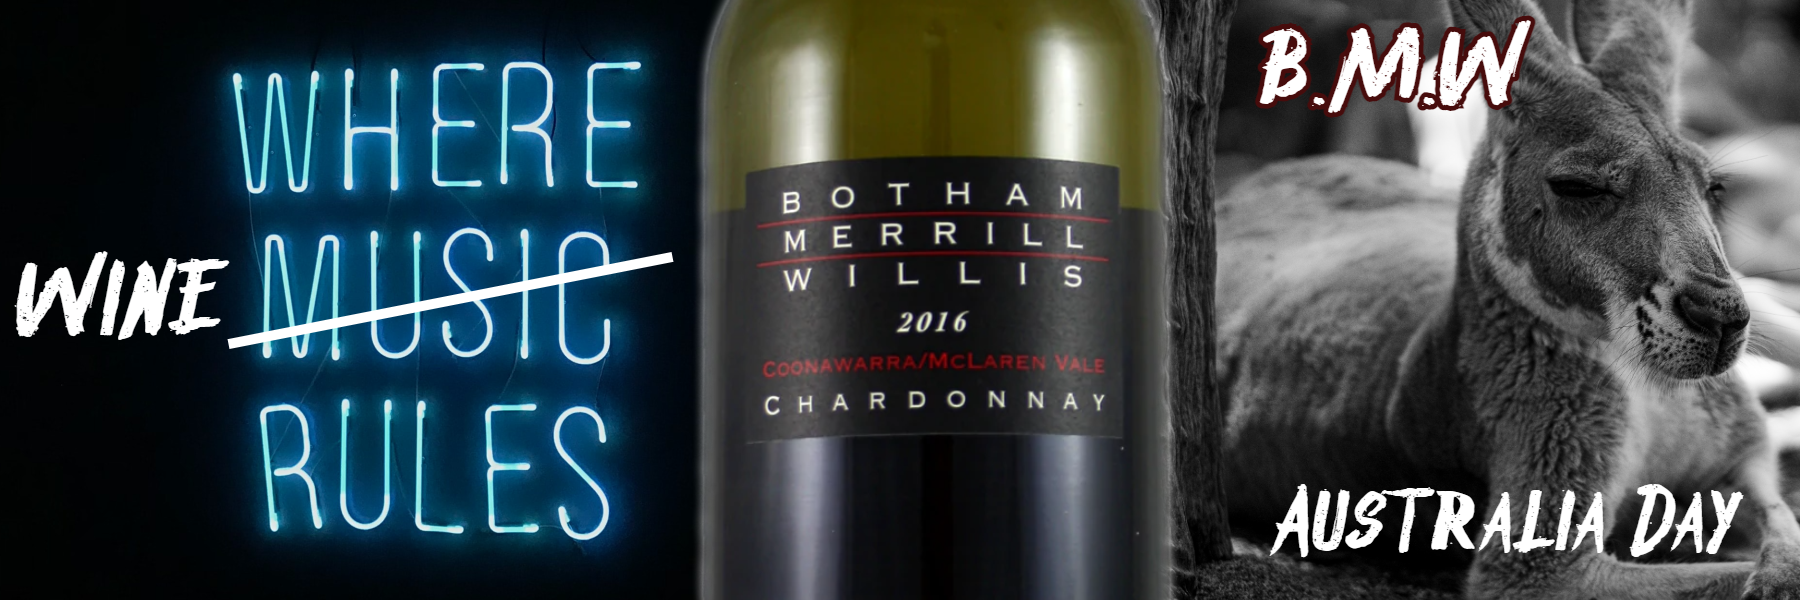 Botham-Merrill-Willis Chardonnay, McLaren Vale, Australia, 2016  £19.75/bottle